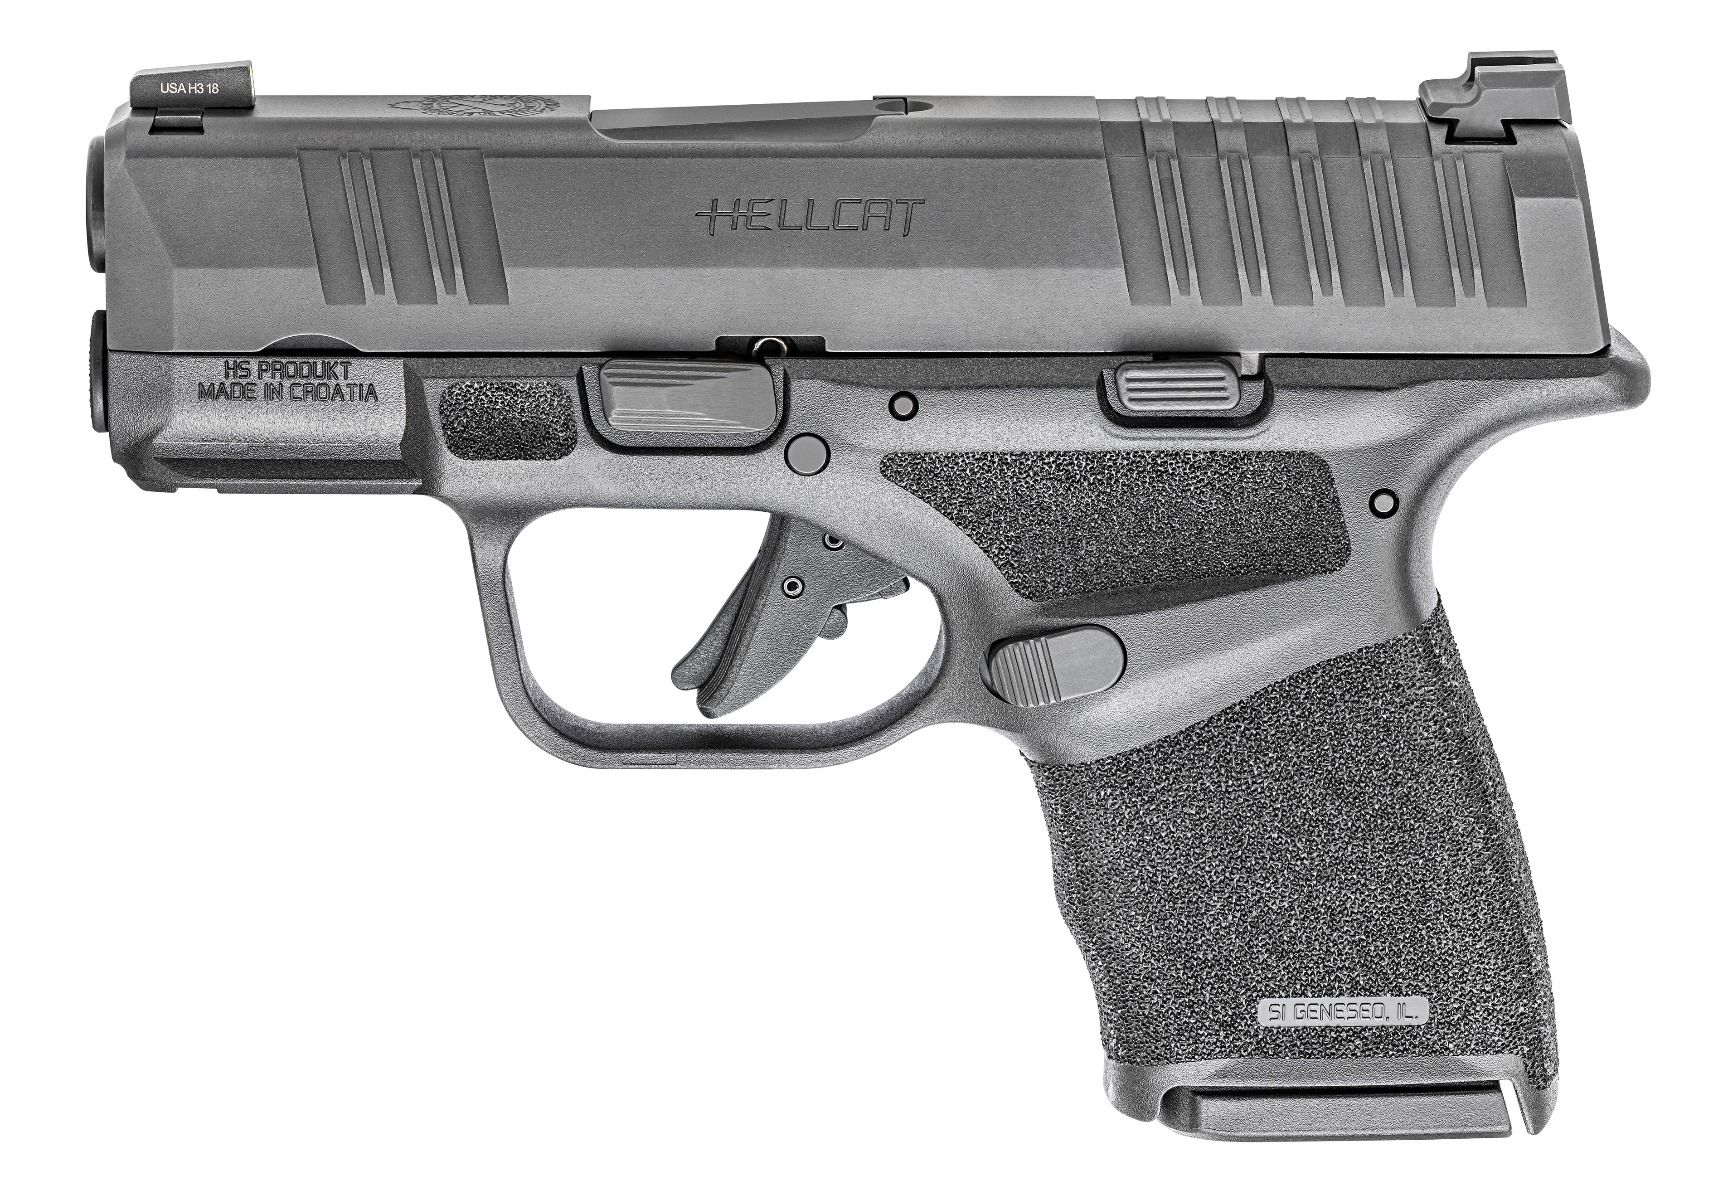 springfield-hellcat-3-micro-compact-9mm-13-1-499-99-gun-deals